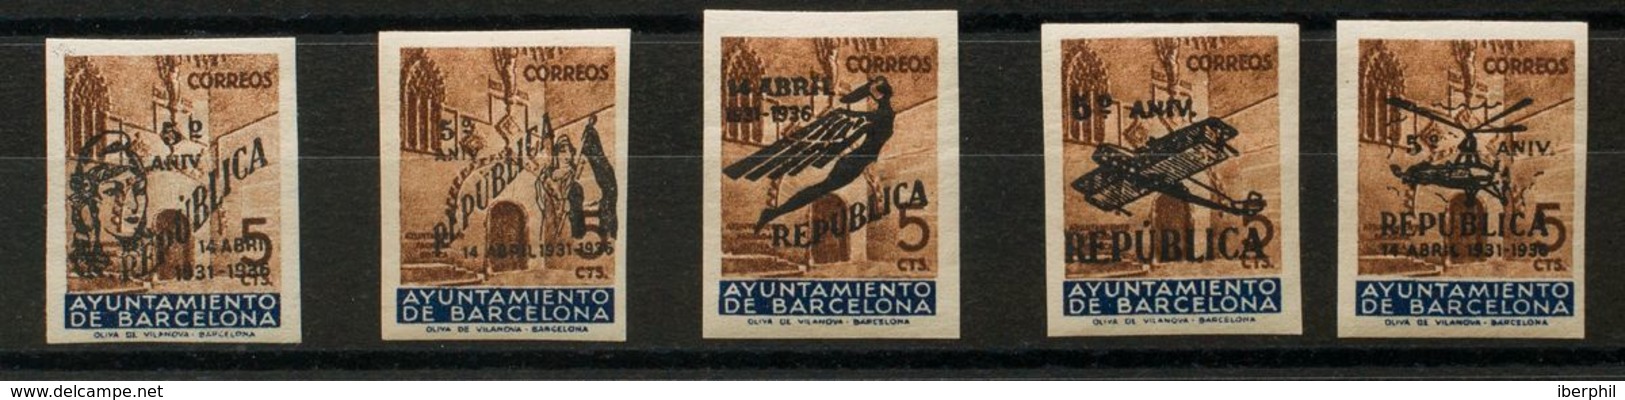 **NE17/21. 1936. Serie Completa. NO EMITIDA. MAGNIFICA. Edifil 2020: 200 Euros - Barcelona